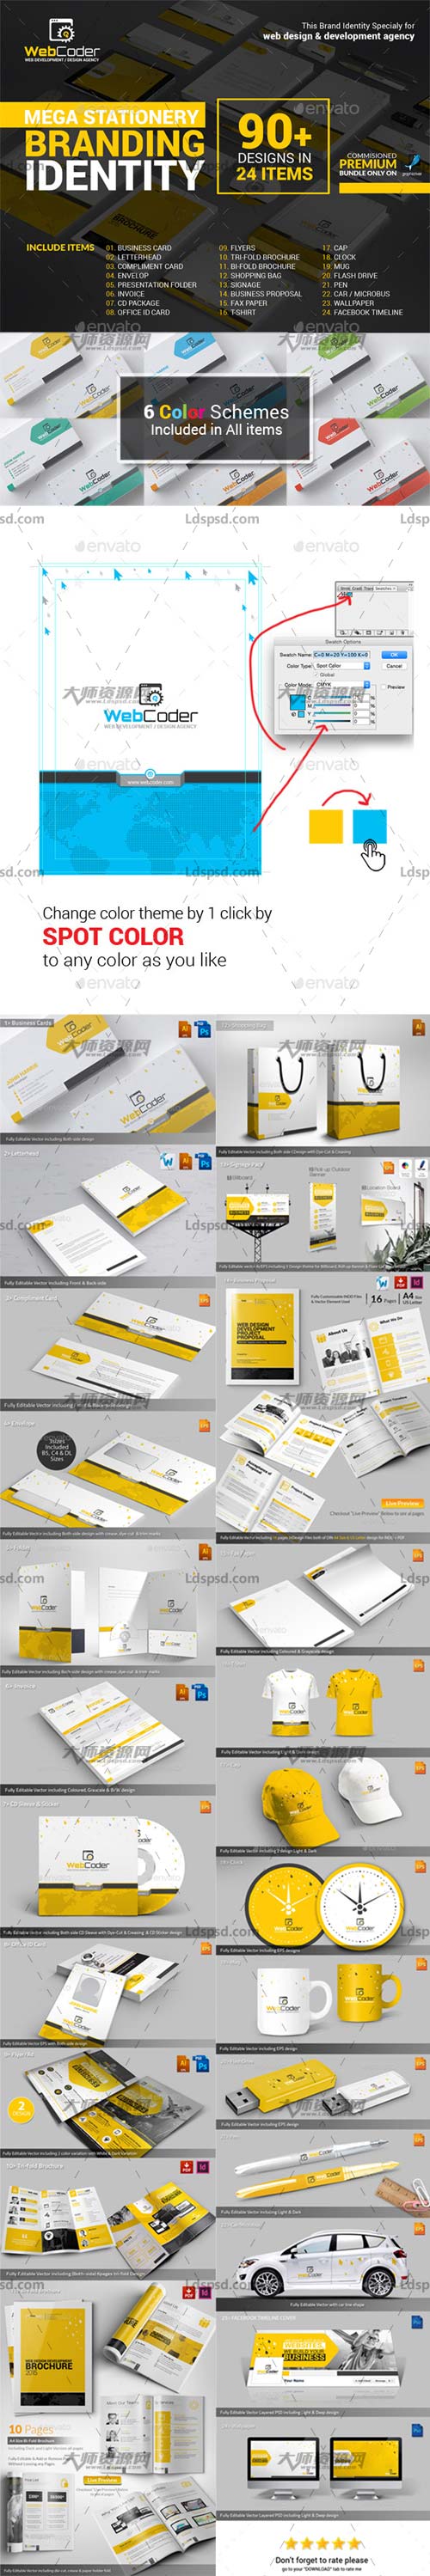 Web Design Agency Stationery Branding Identity,极品VIS(企业视觉识别系统)模板